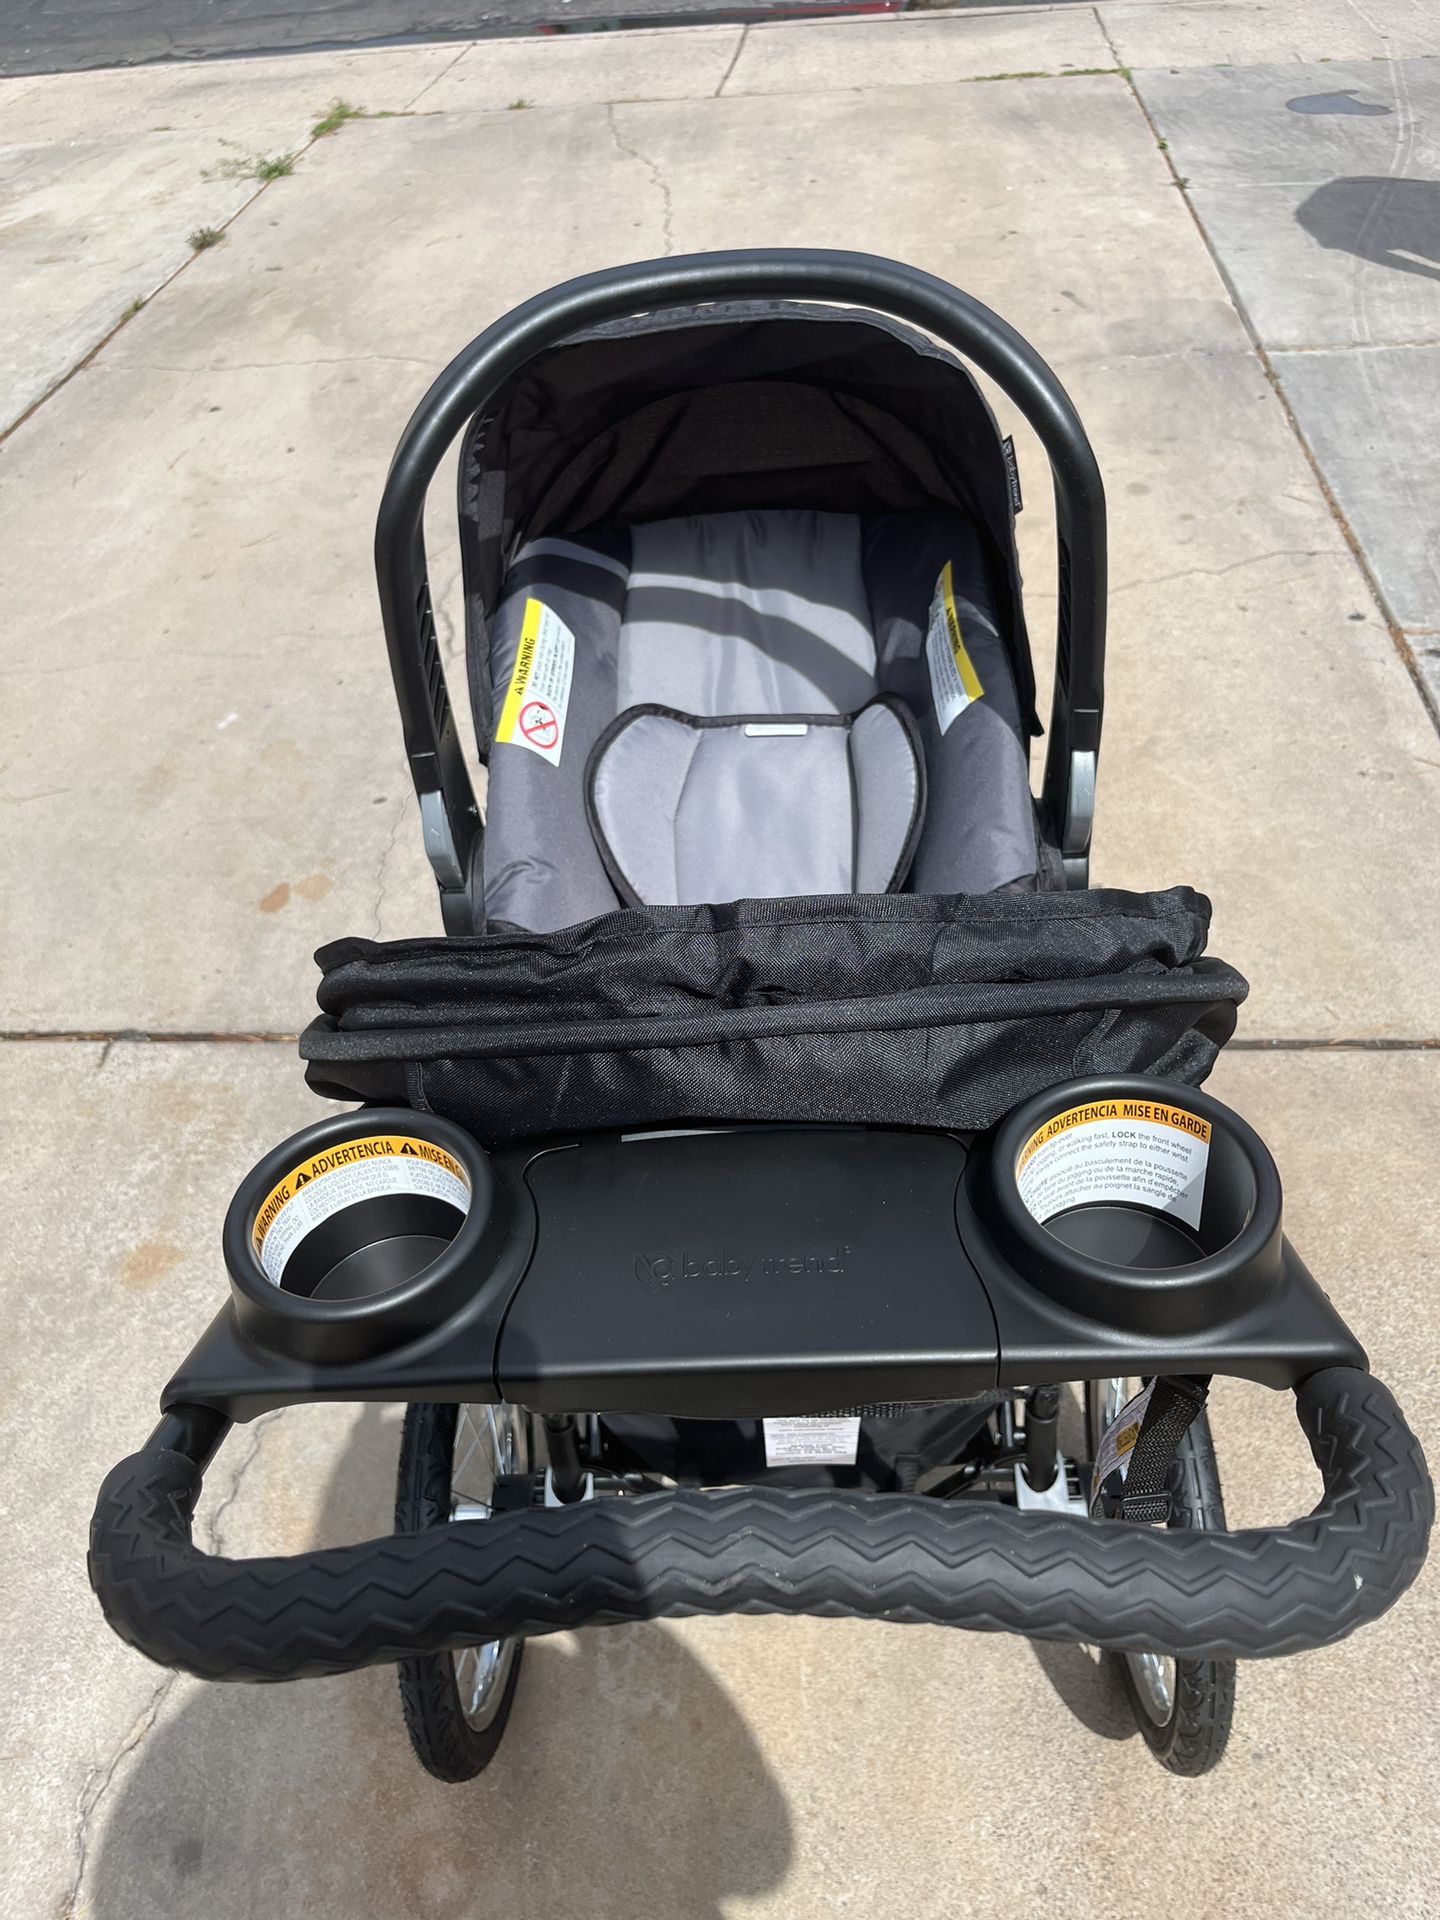 Baby Stroller $125